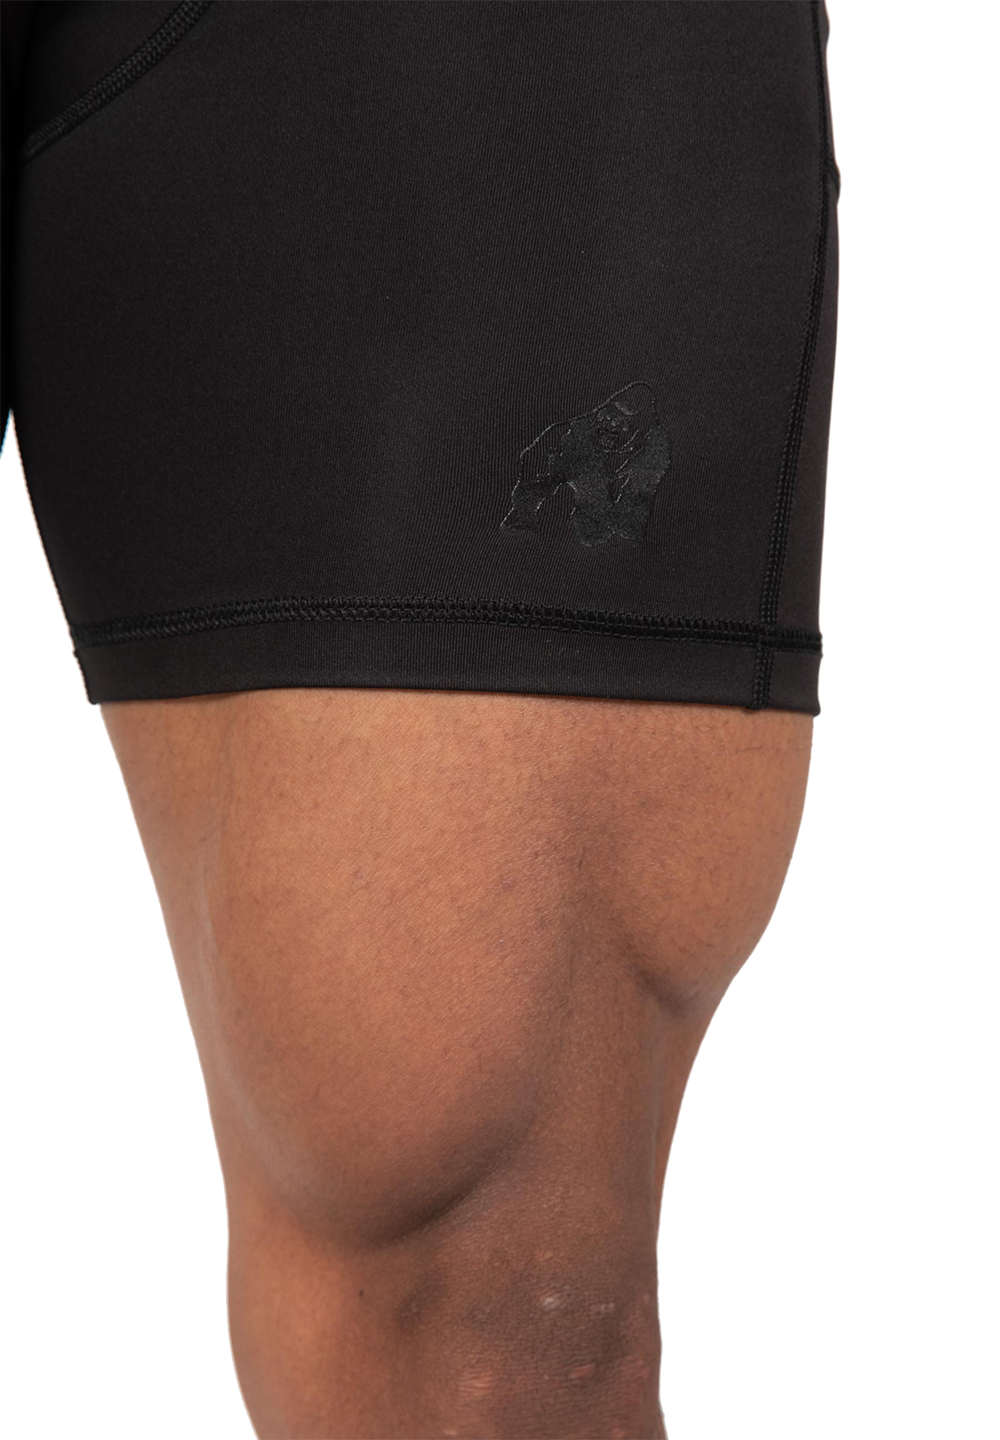 Шорты Smart Shorts – Black от Gorilla Wear